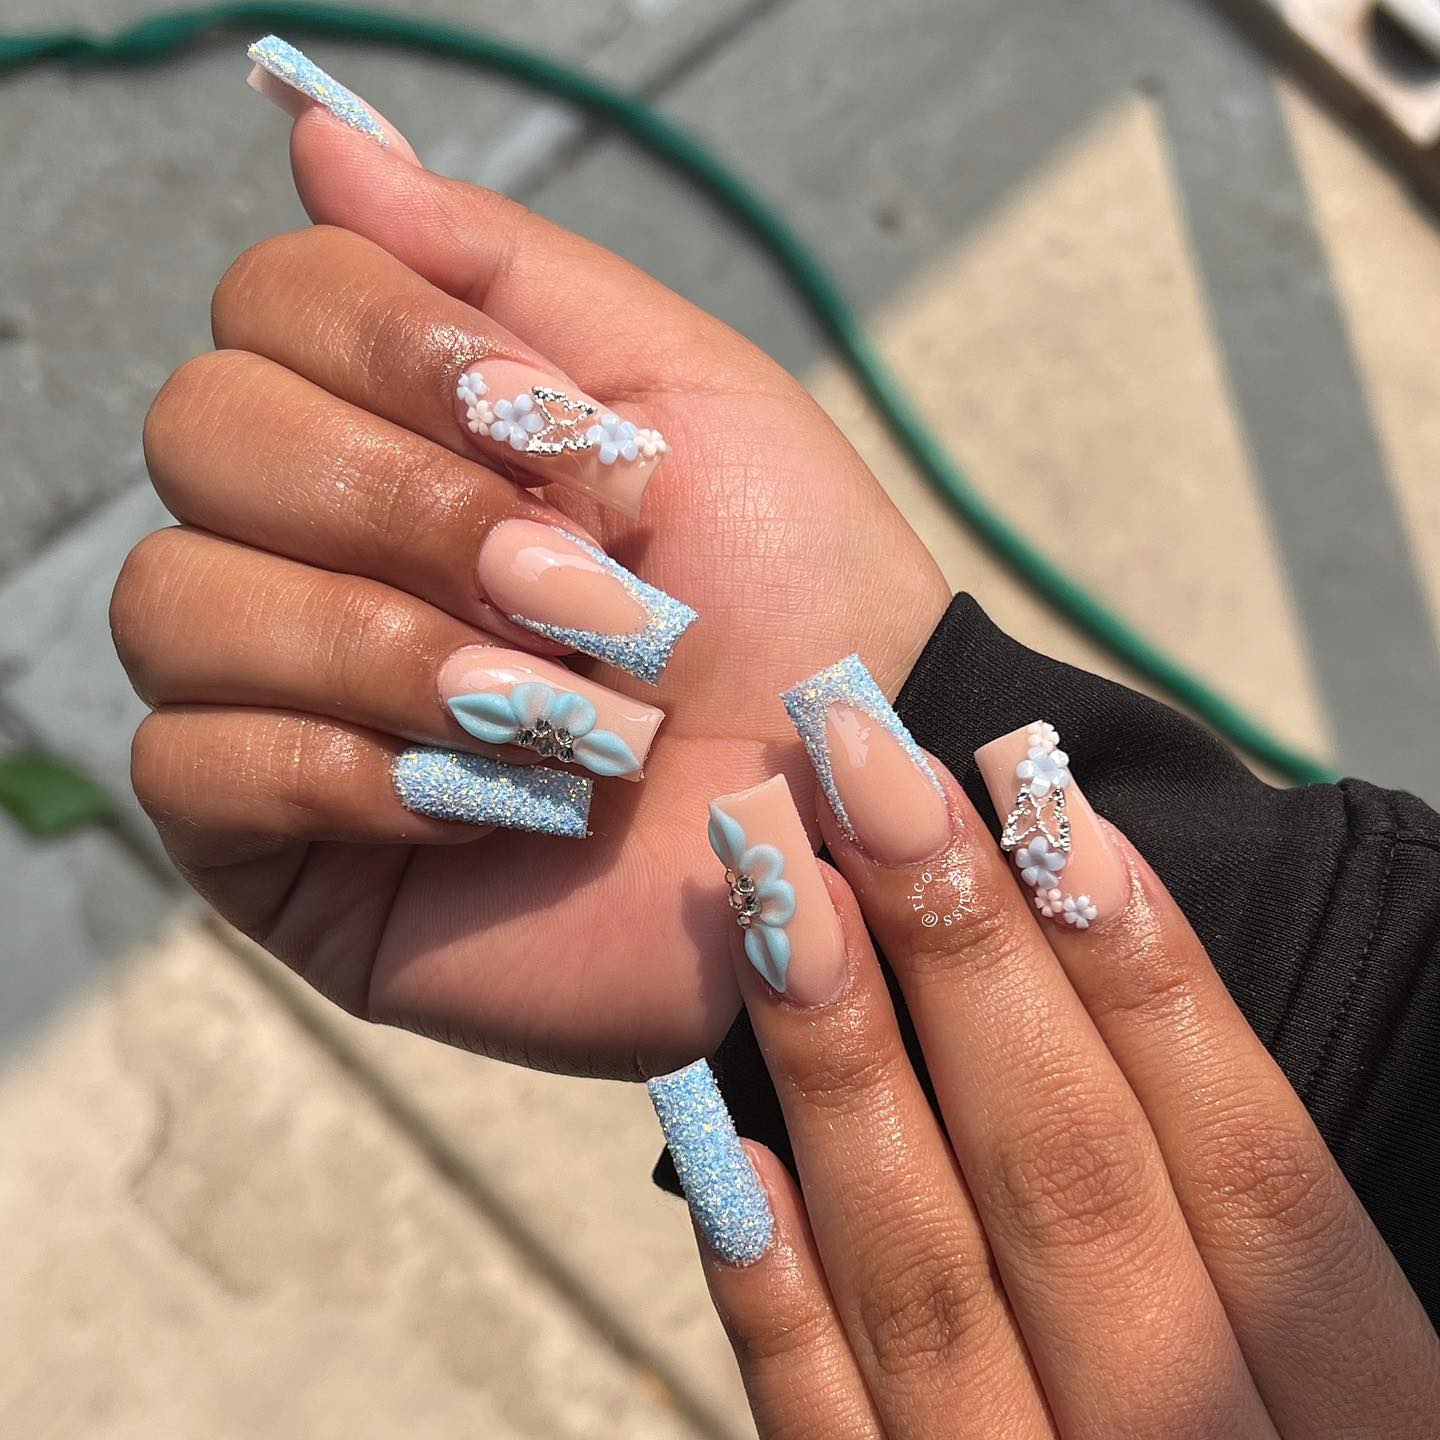 light blue nails